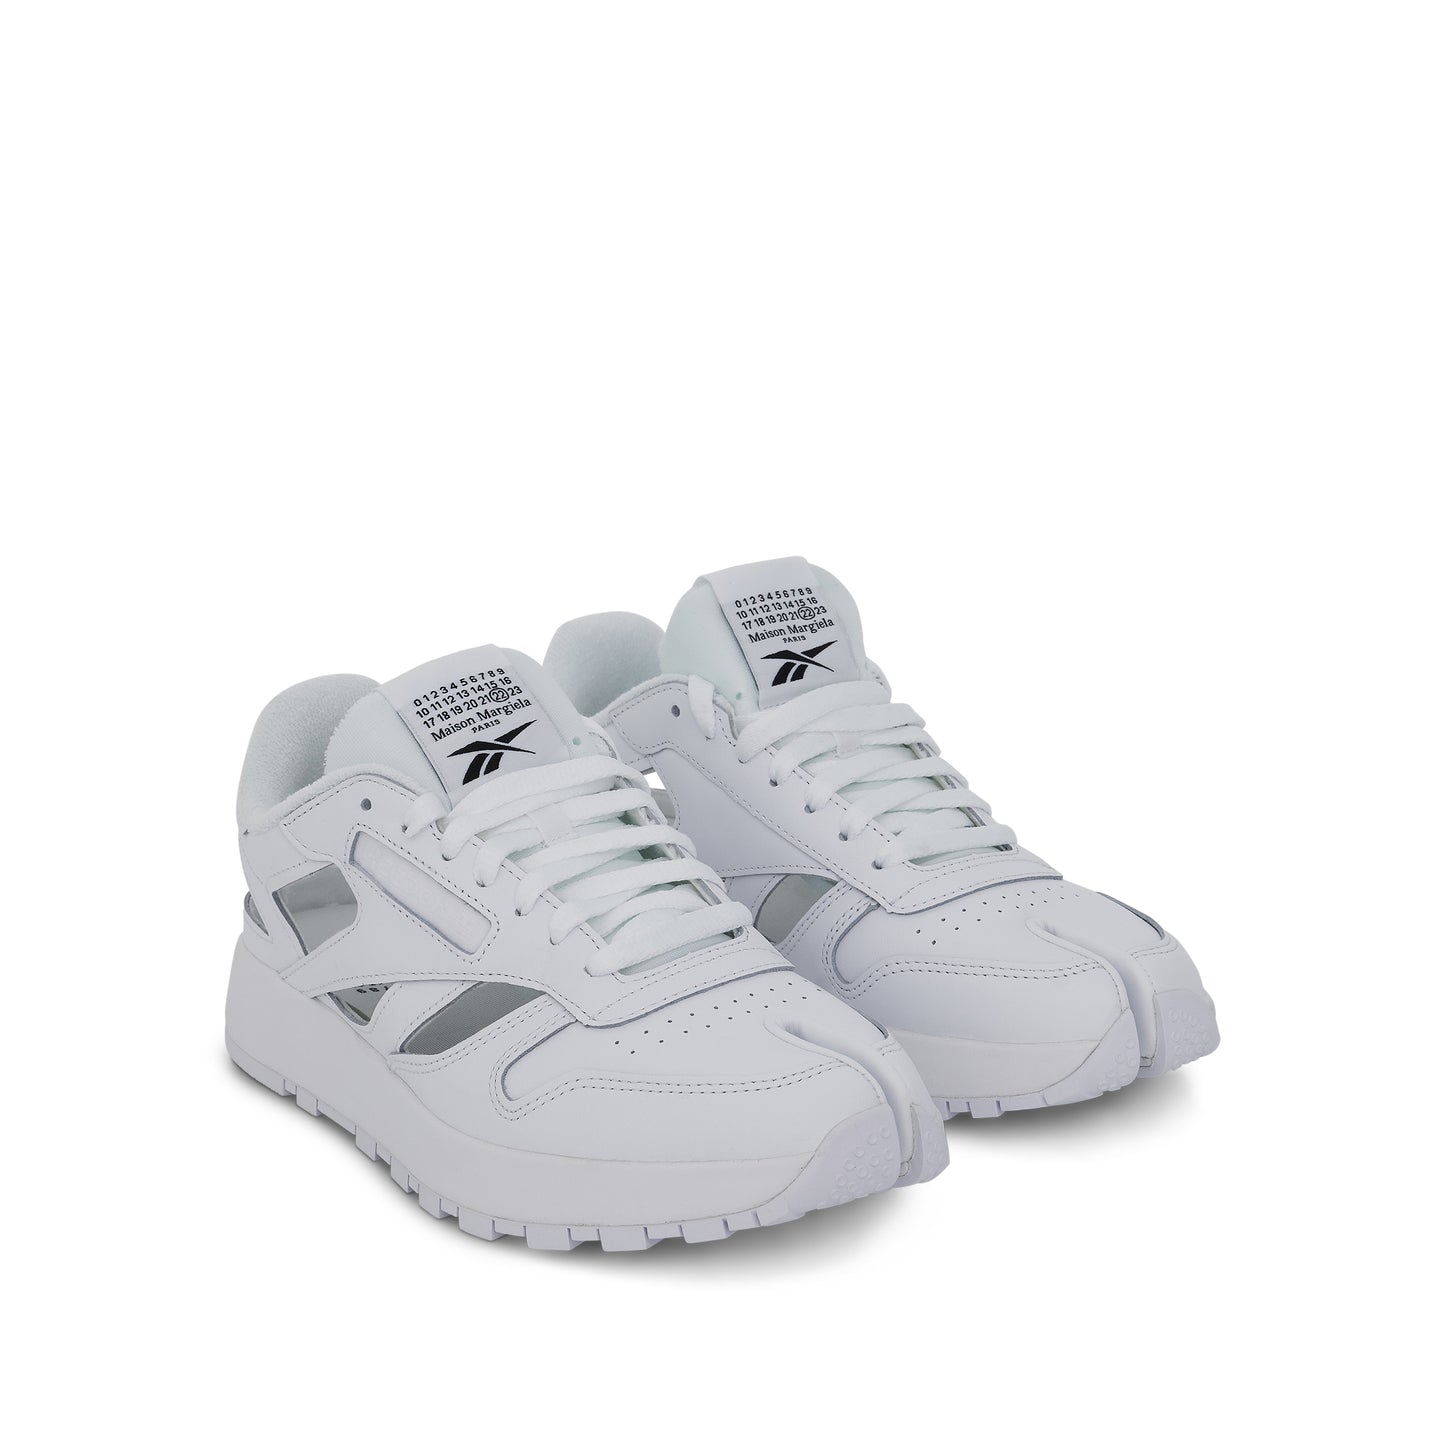 Maison Margiela x Reebok Tabi Gladiator Low Sneaker in White